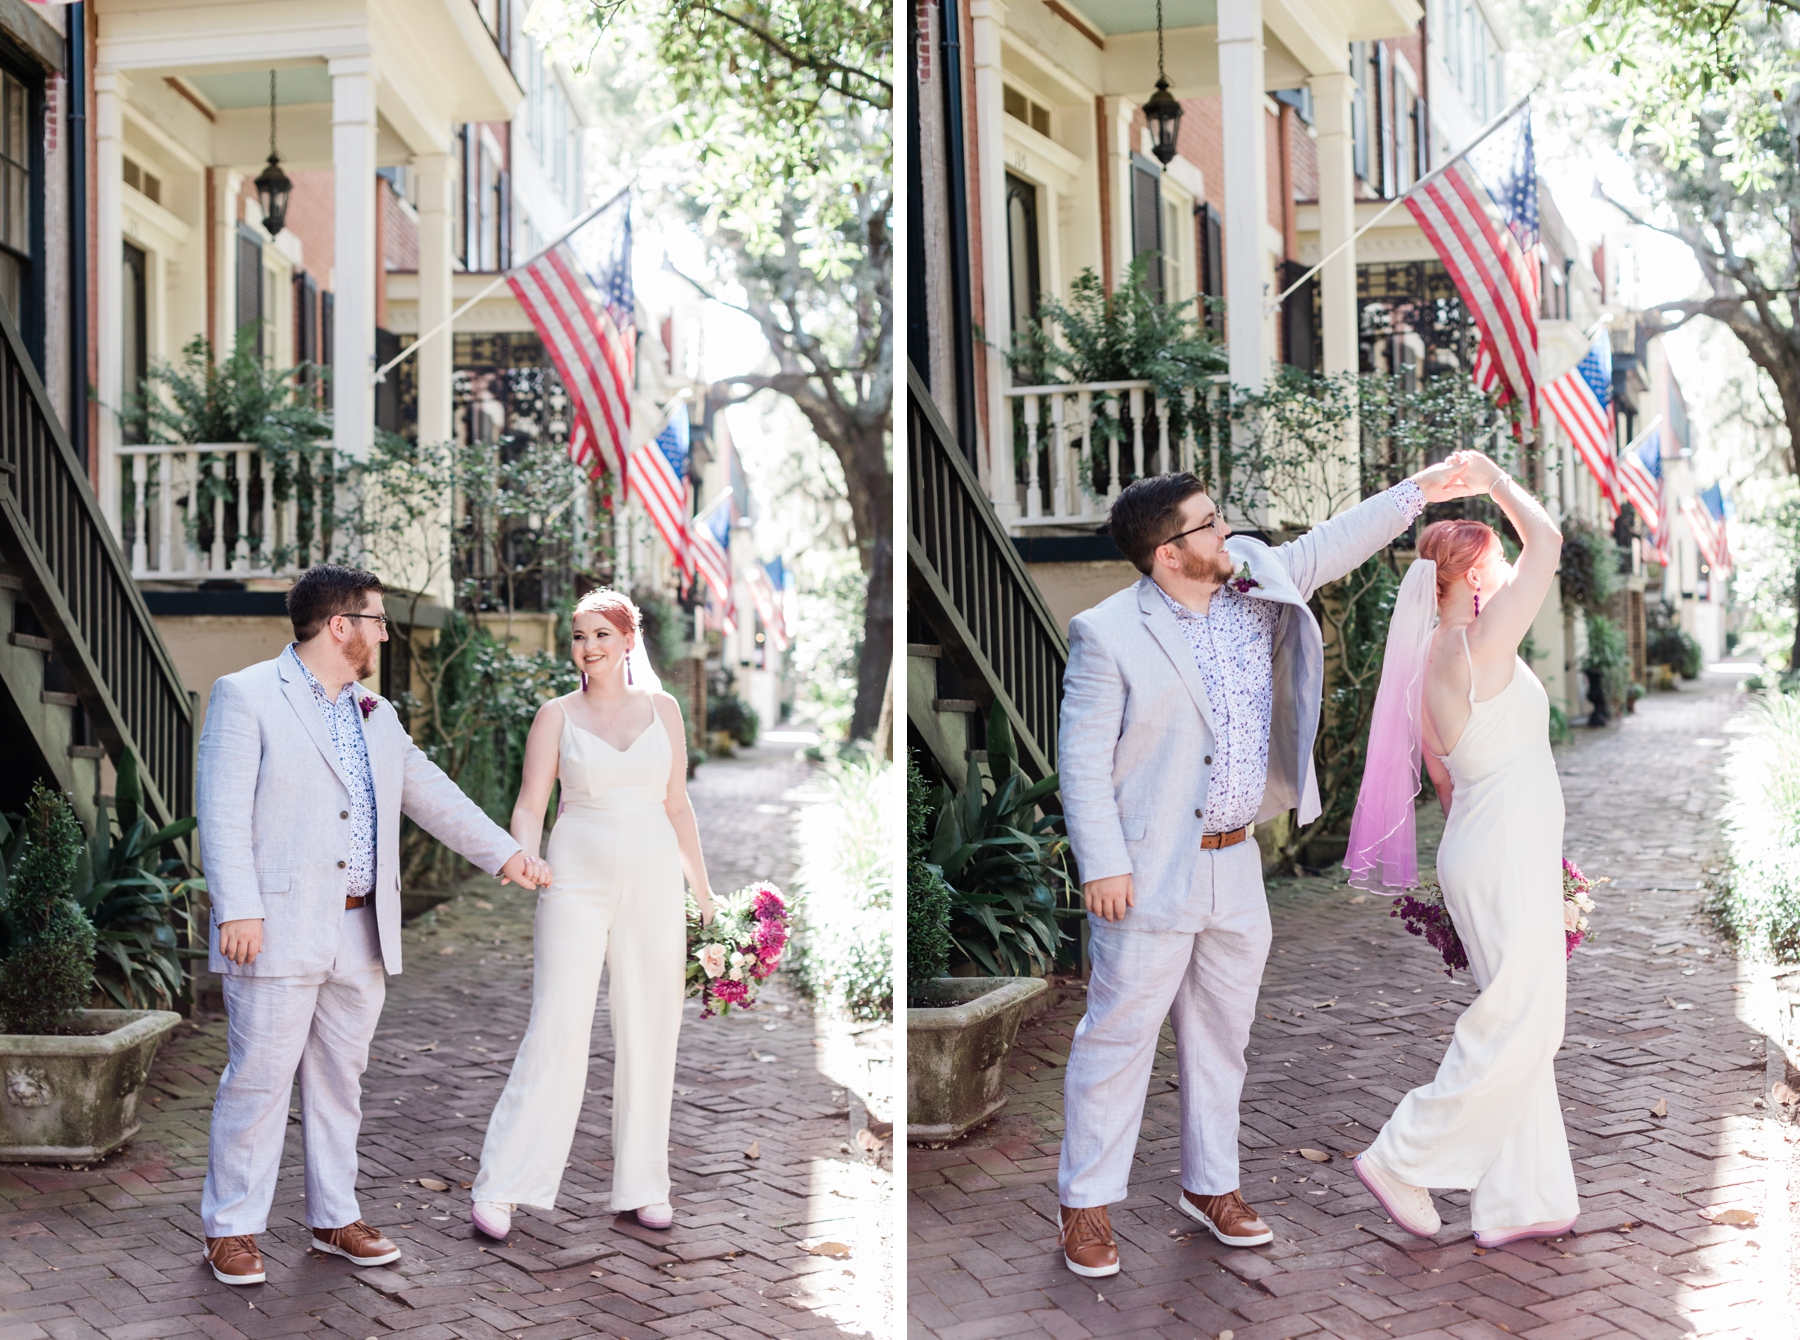 Sarah and Peter’s summer elopement in Historic Savannah by Savannah Elopement Package